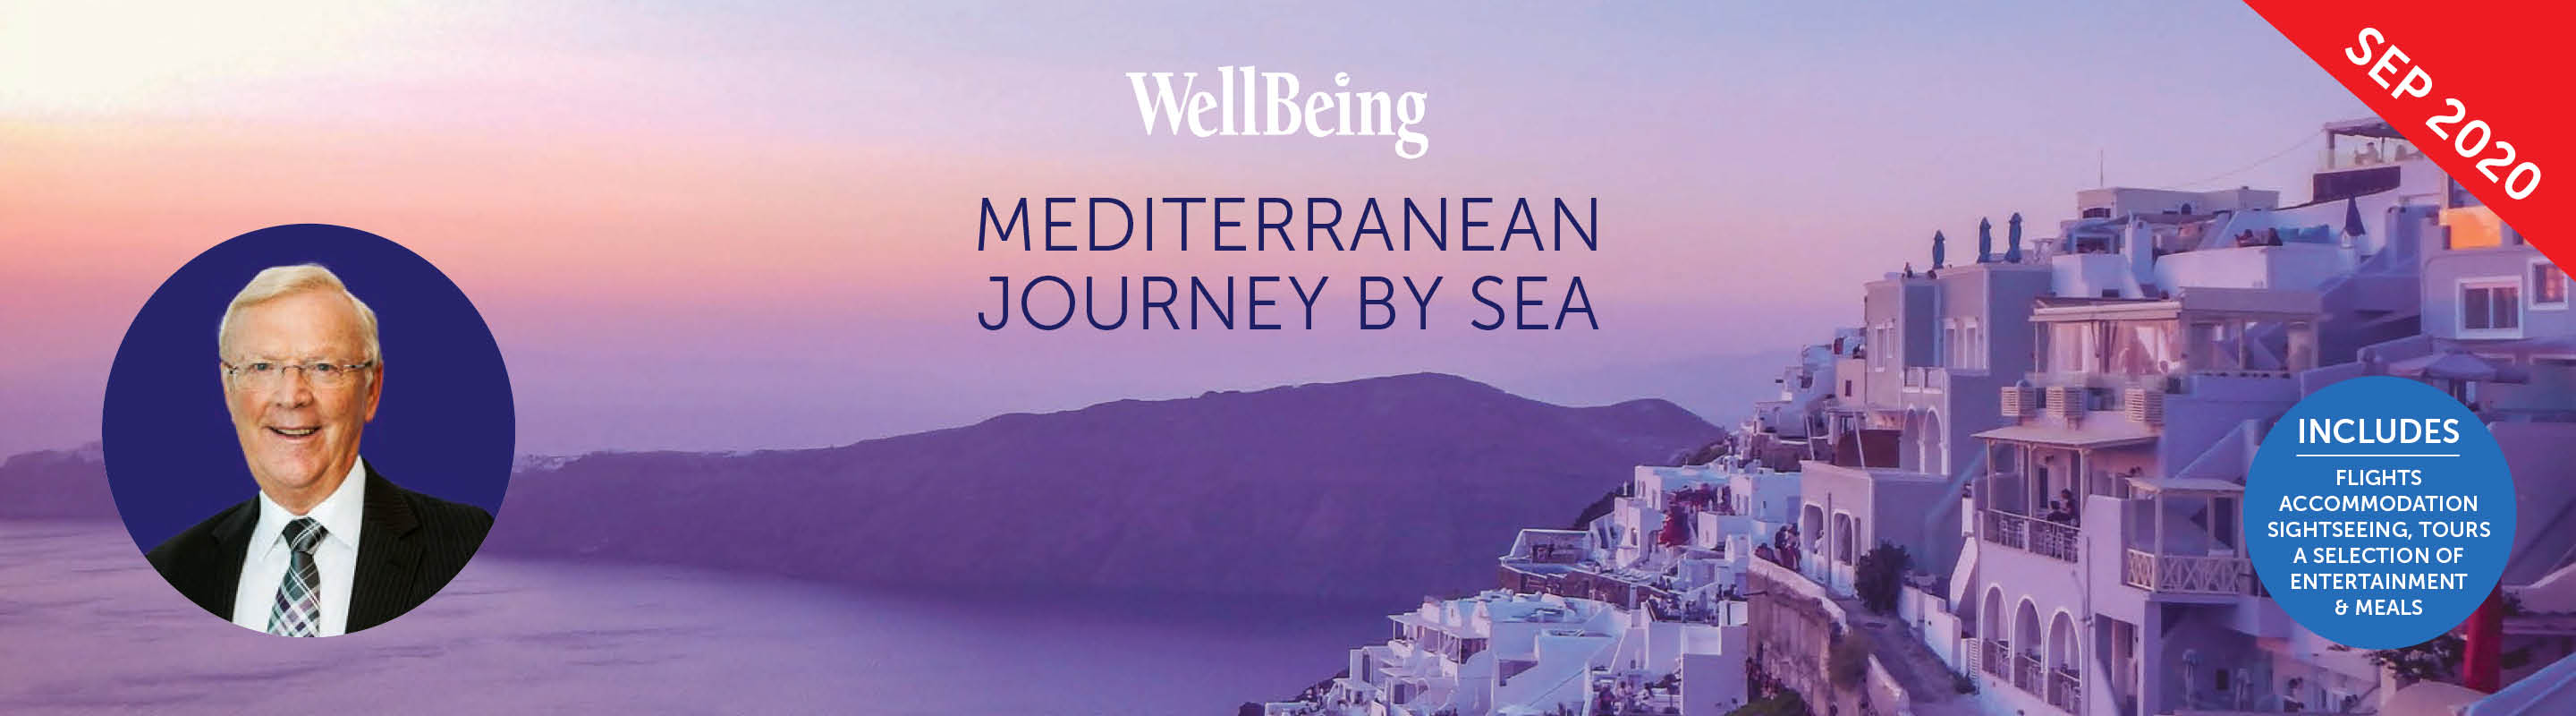 mediterranean-lifestyle-sep-2020-1.jpg